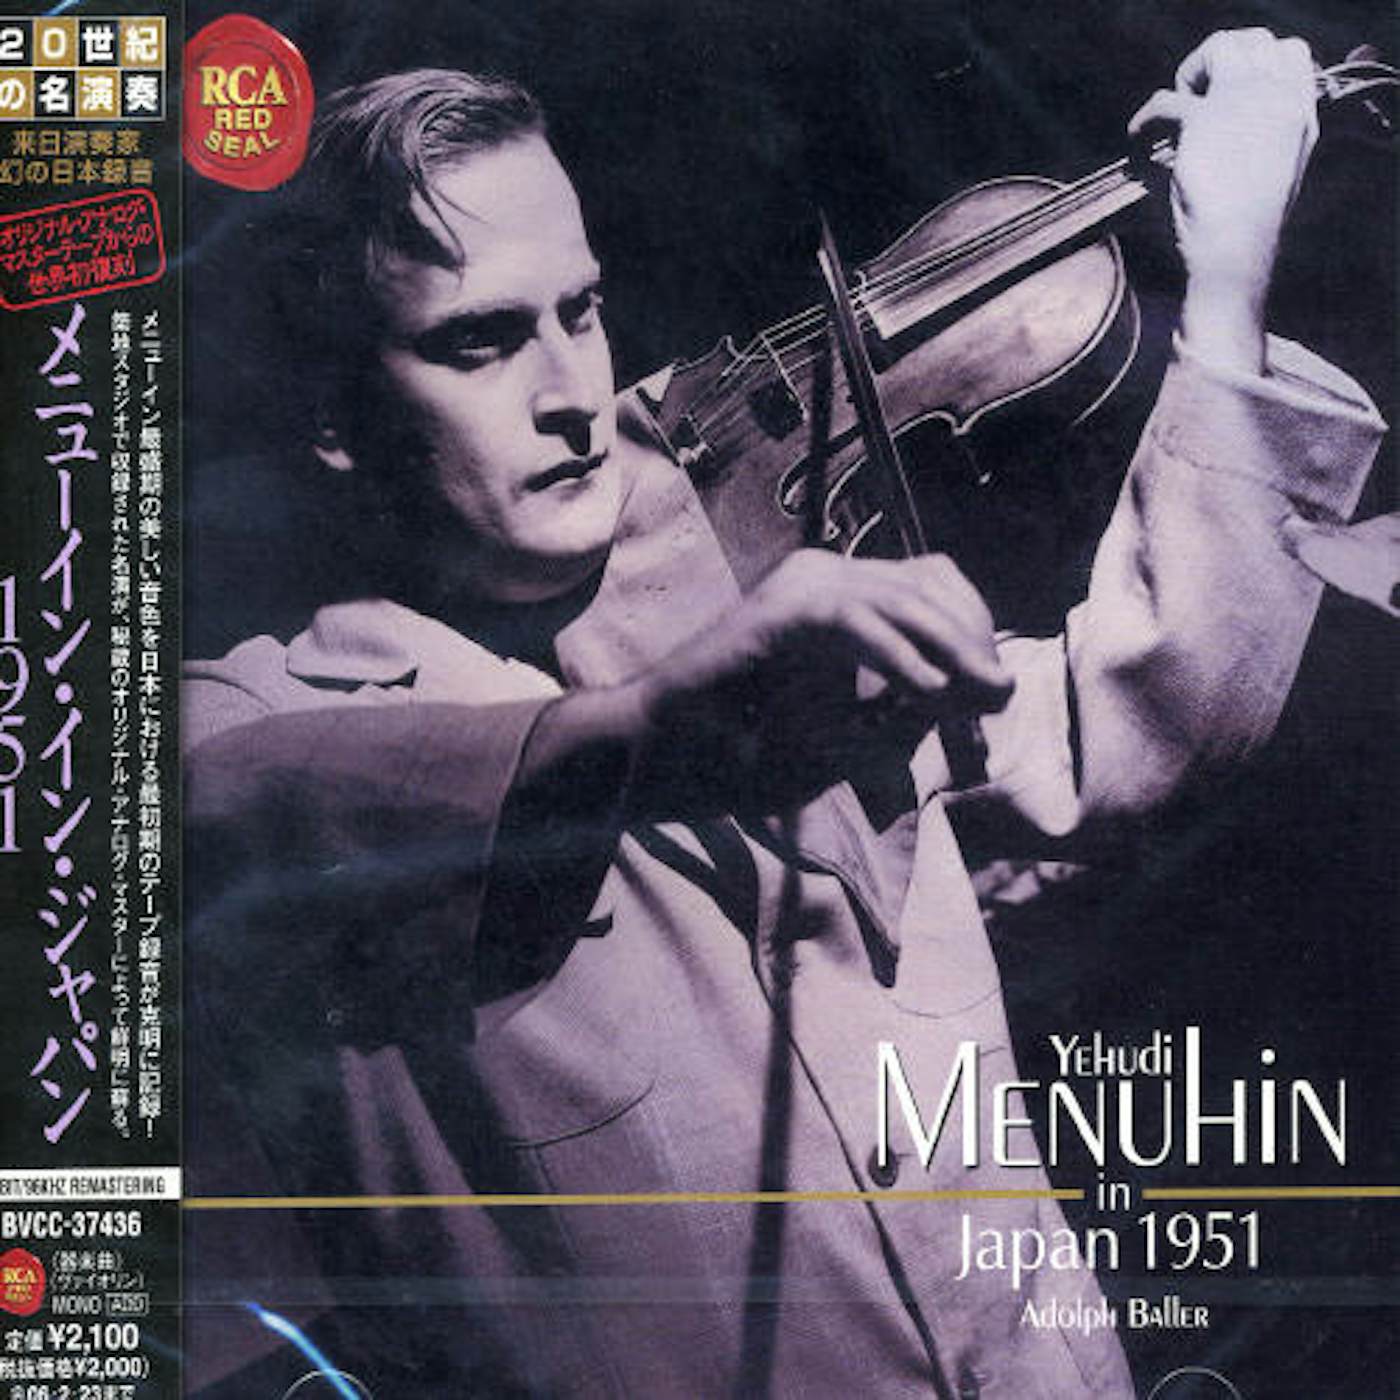 Yehudi Menuhin MENUHIN IN JAPAN 1951 CD